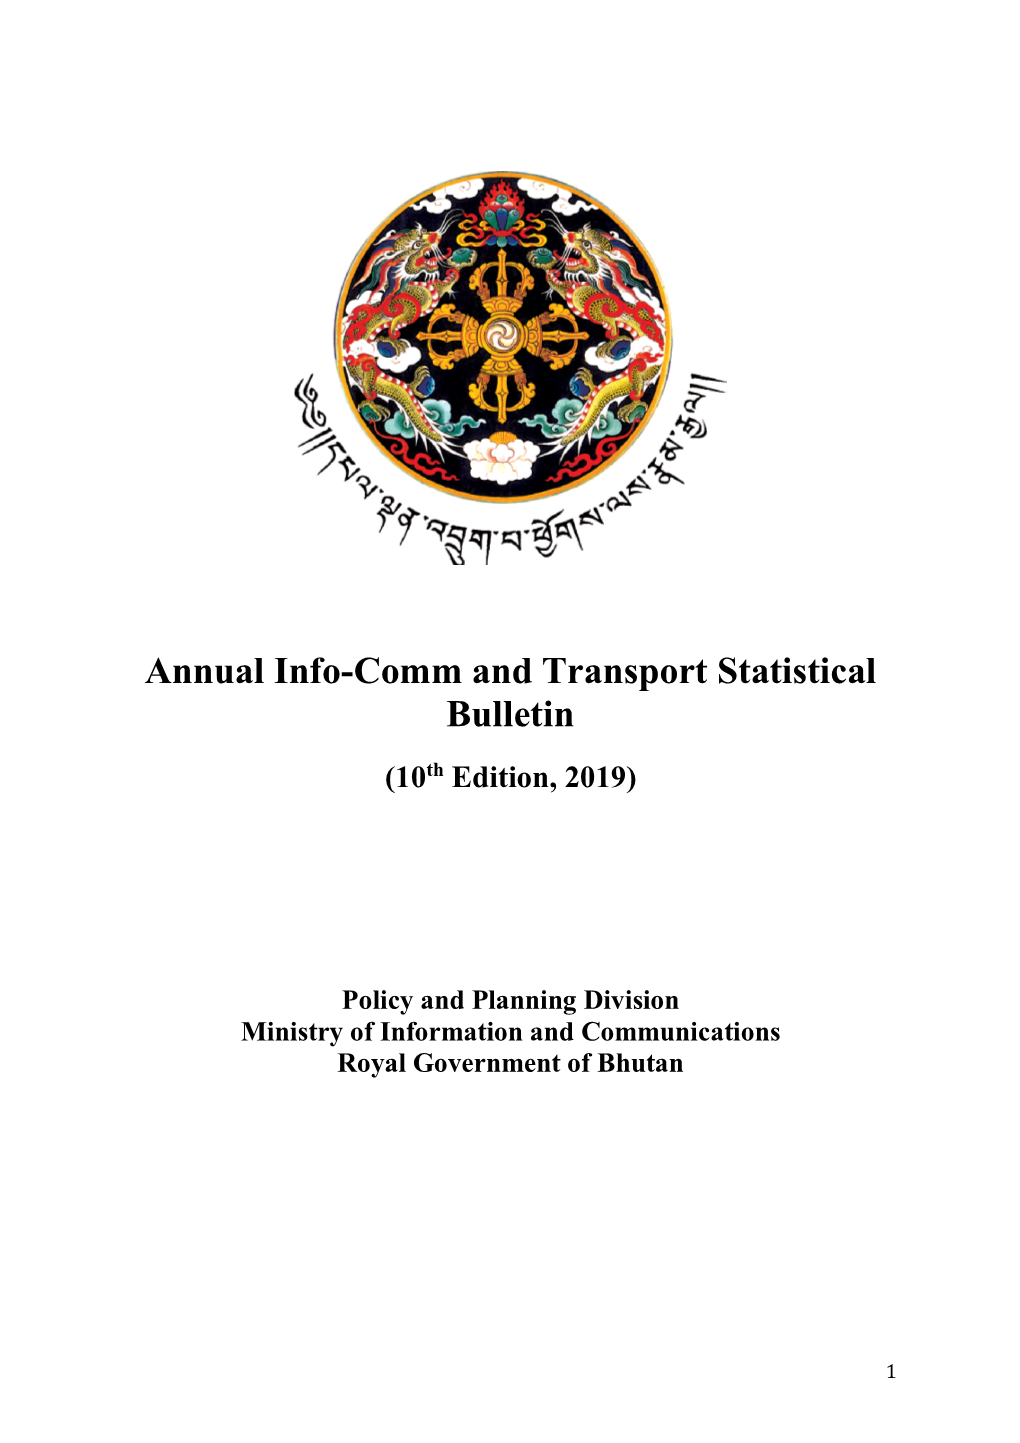 Annual Info-Comm & Transport Statistical Bulletin 2019